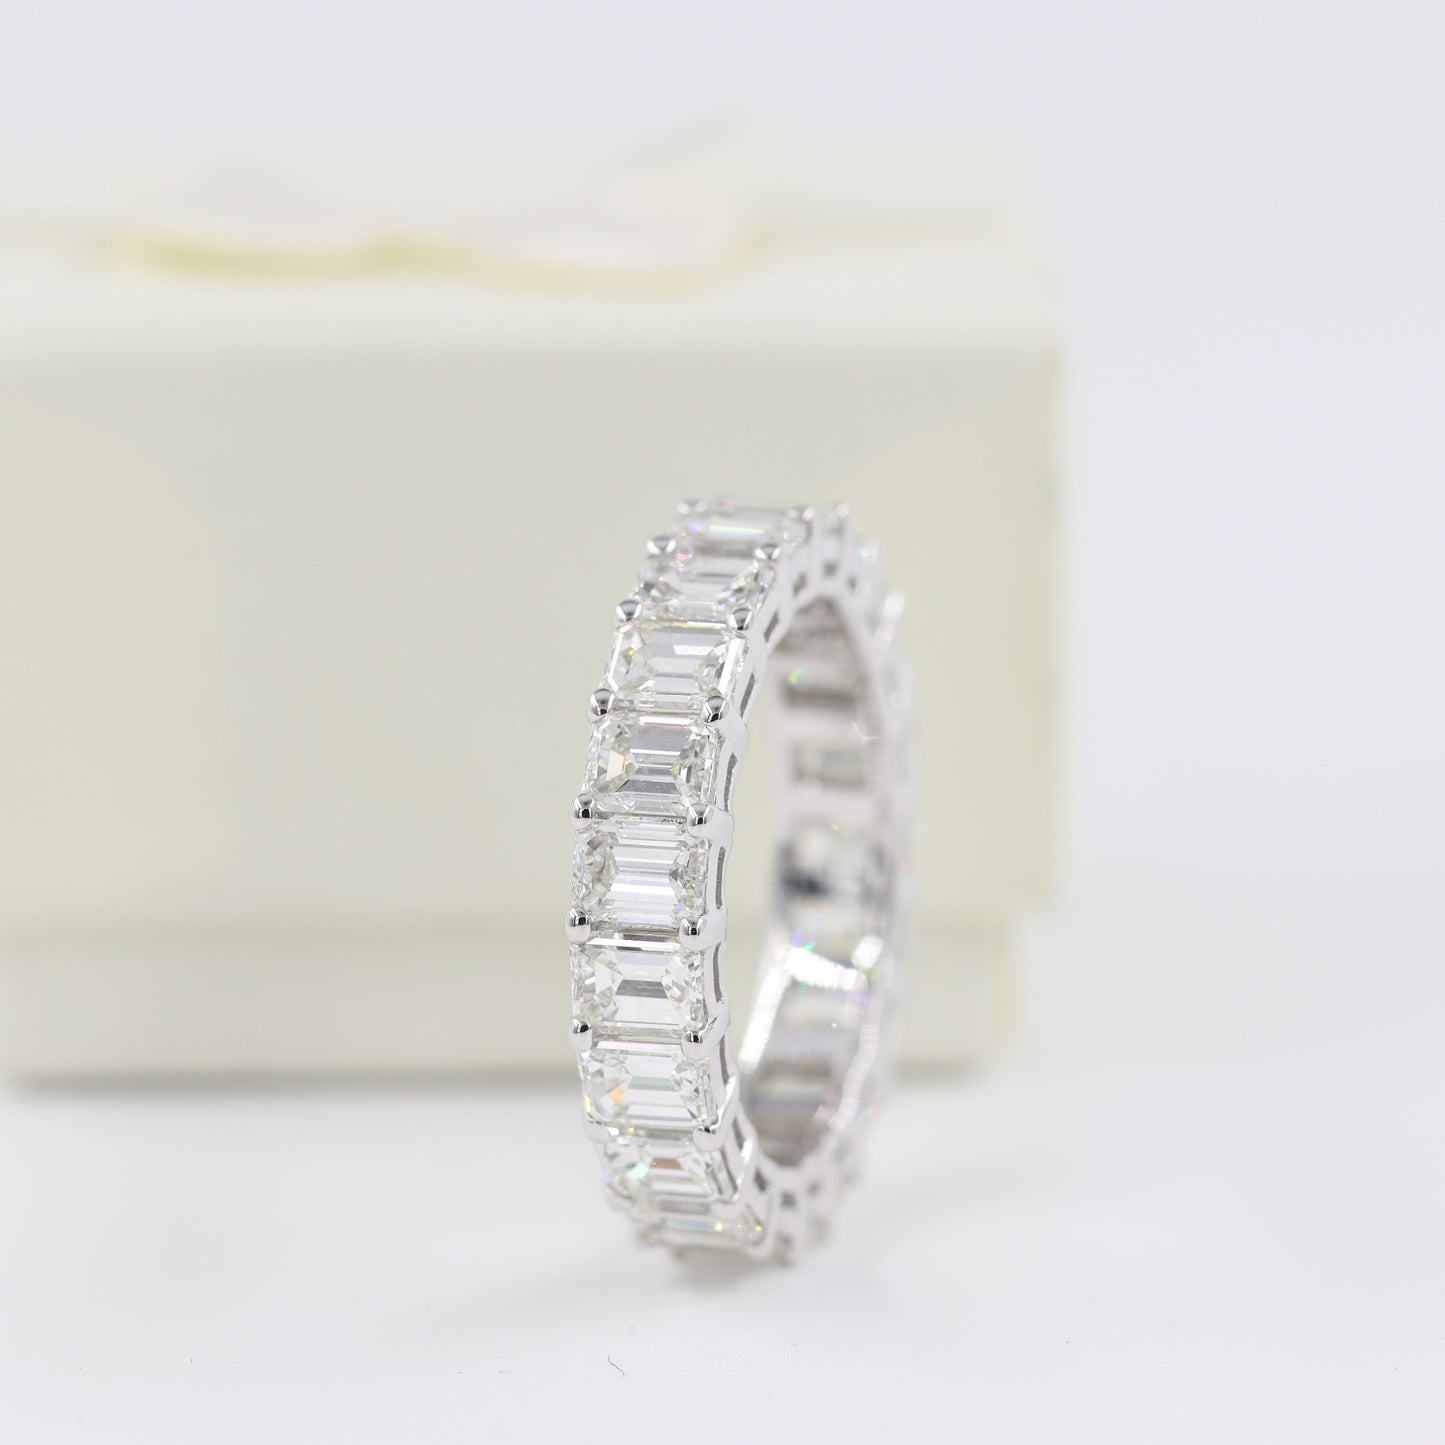 7ct Emerald Cut Diamond Width 5mm/Emerald Cut Diamond Wedding Band/Full Eternity Wedding Ring/Natural Diamond/Anniversary gift